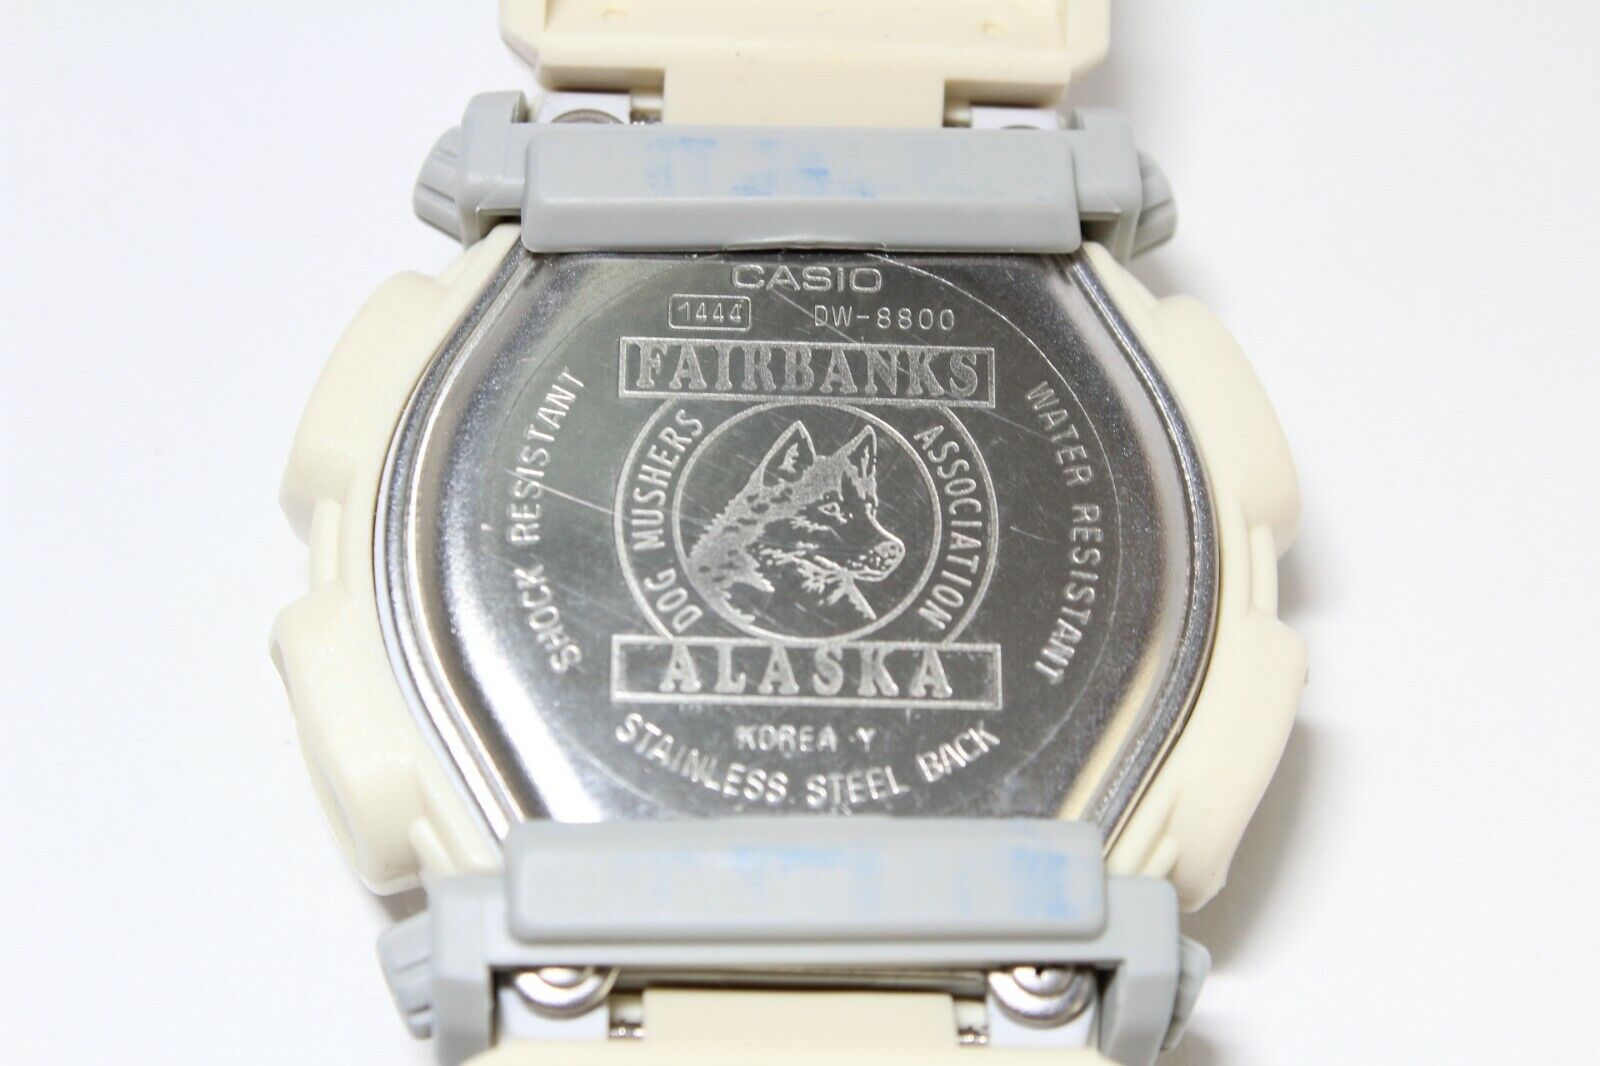 CASIO DW-8800AJ-7BT Codename ADMA Fairbanks Alaska white Watch G-Shock  resistant